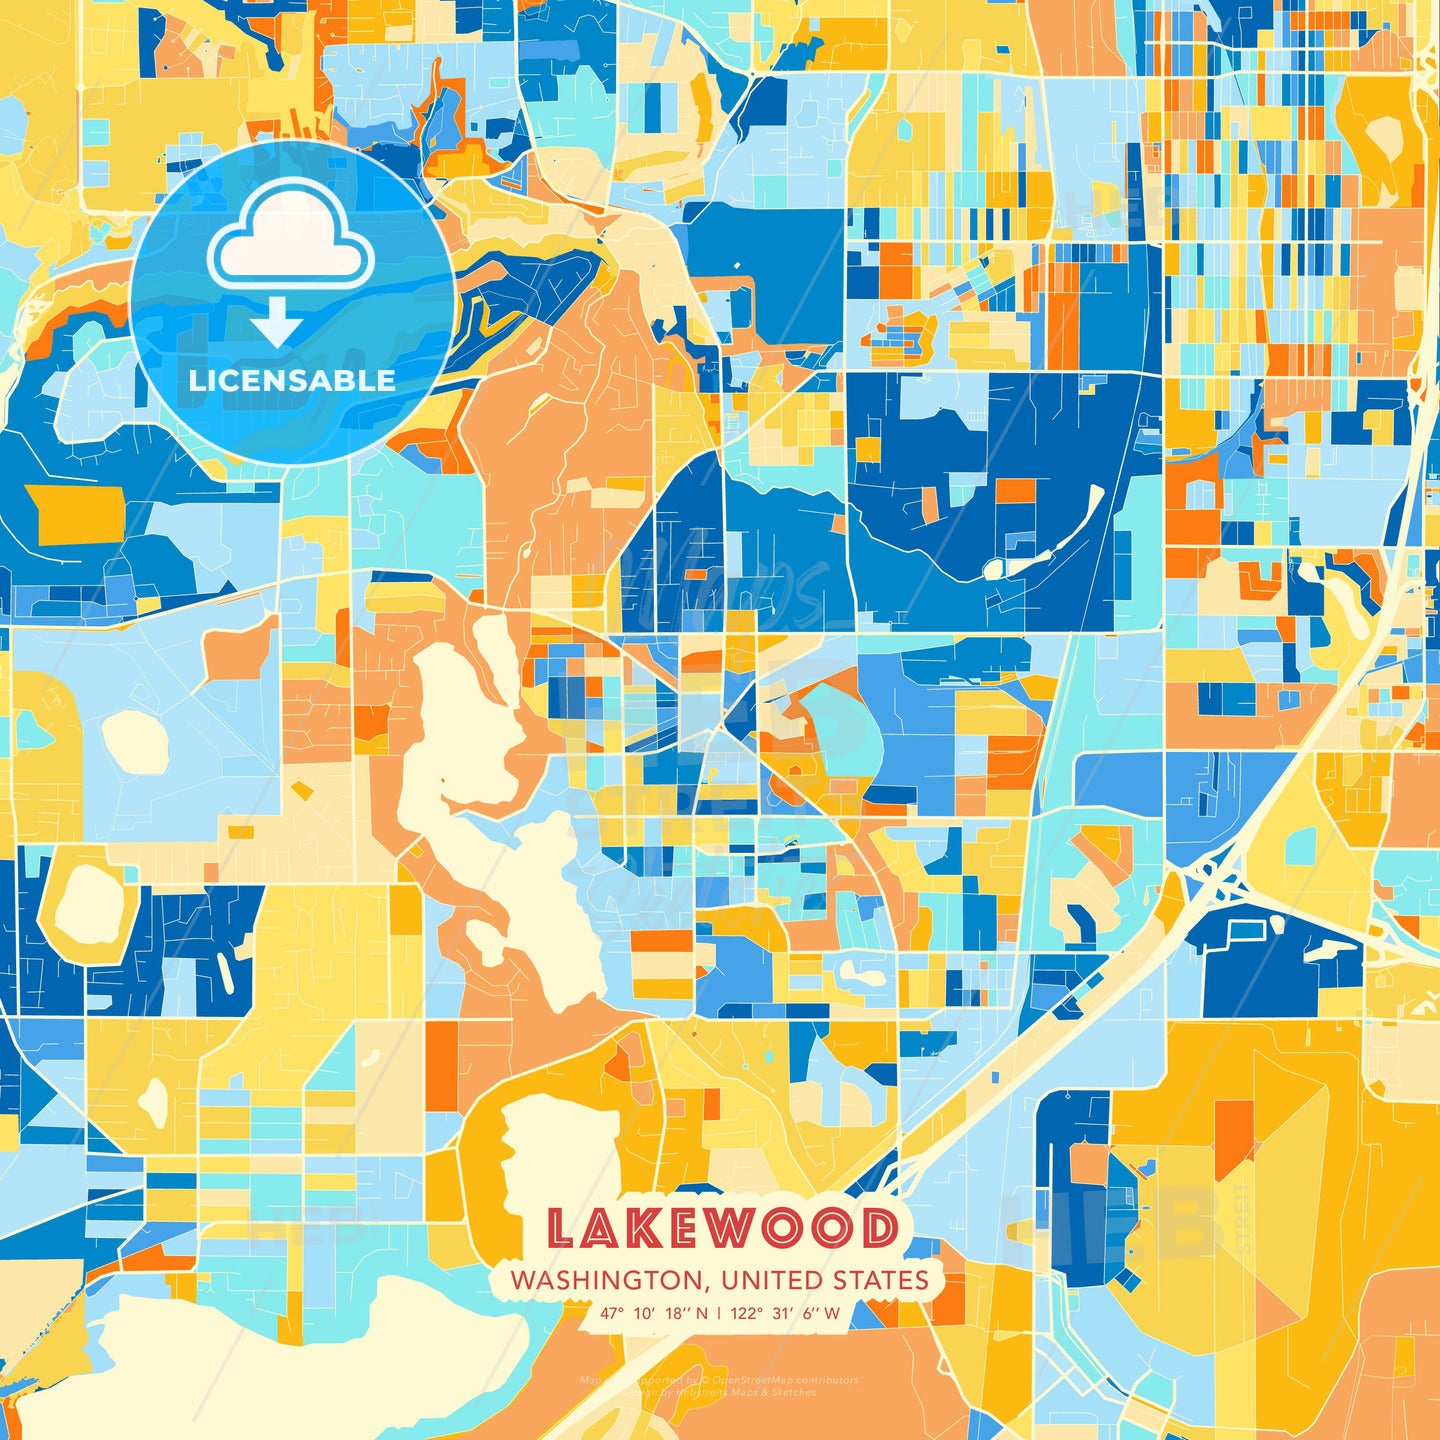 Lakewood, Washington, United States, map - HEBSTREITS Sketches